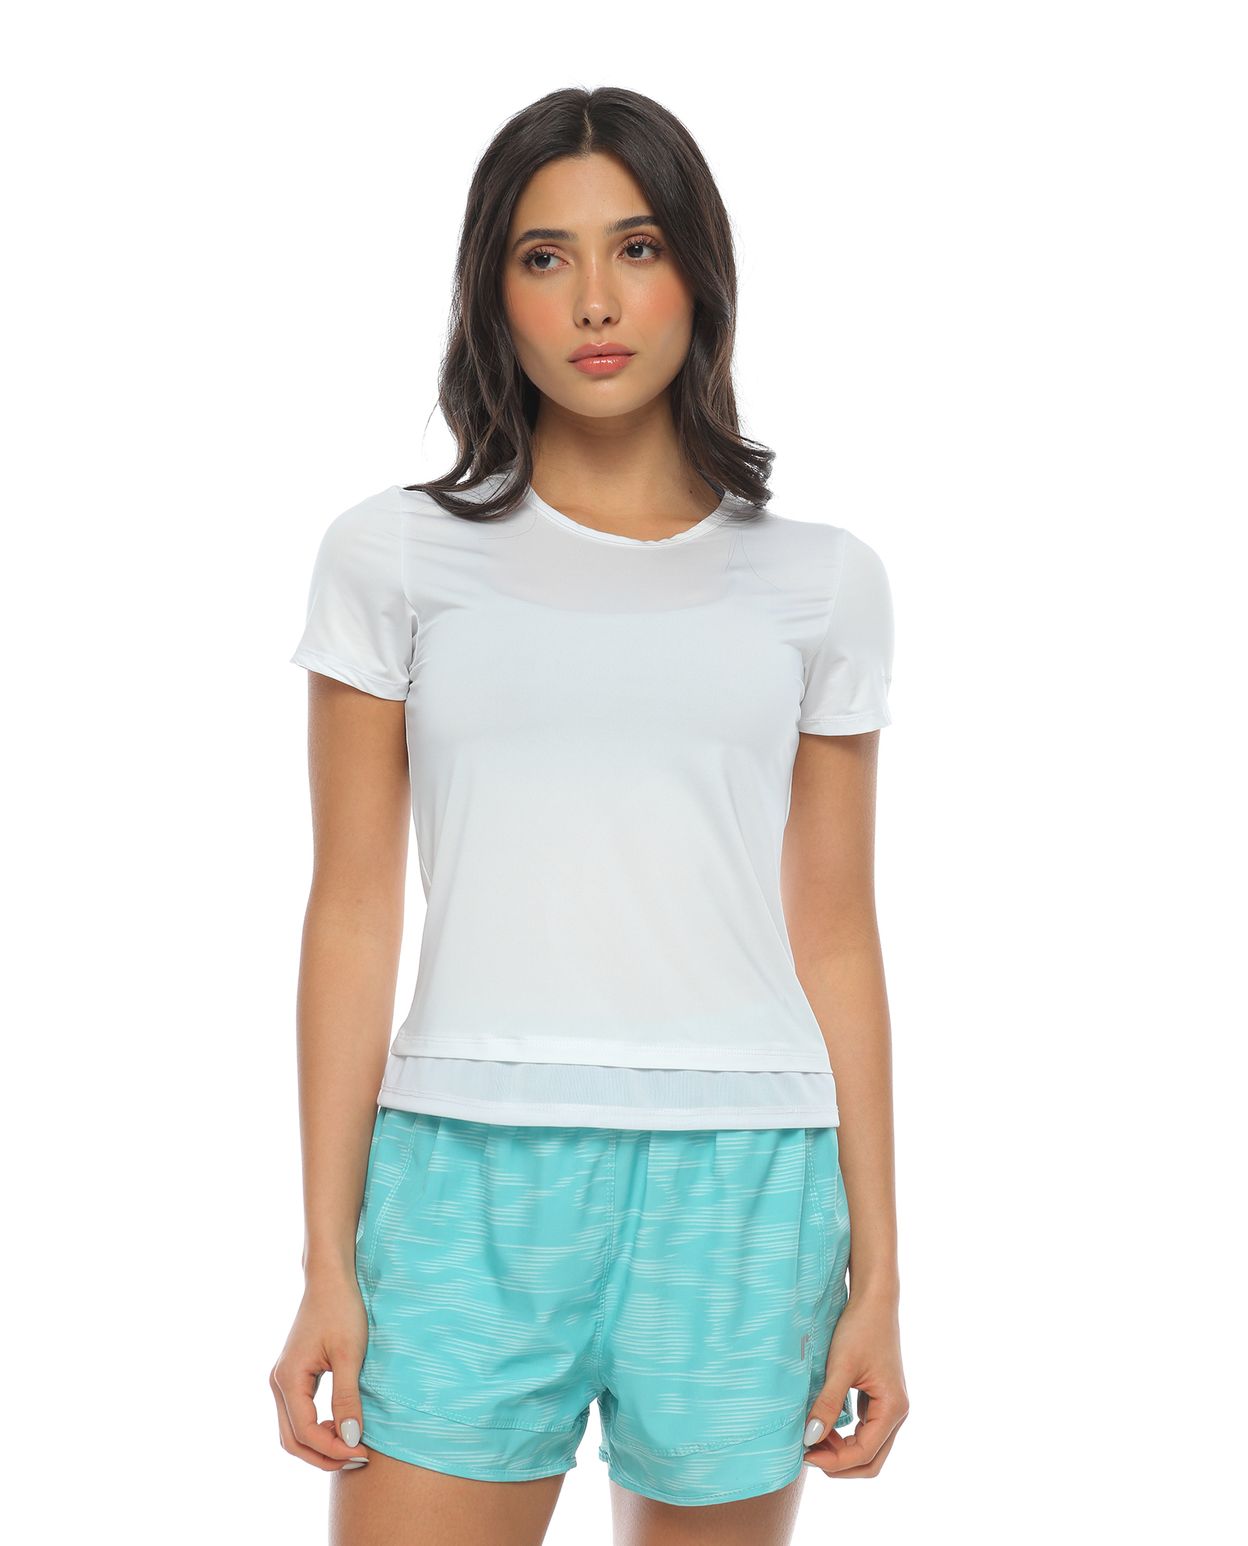 Camiseta deportiva mujer, color blanco, manga corta - racketball movil